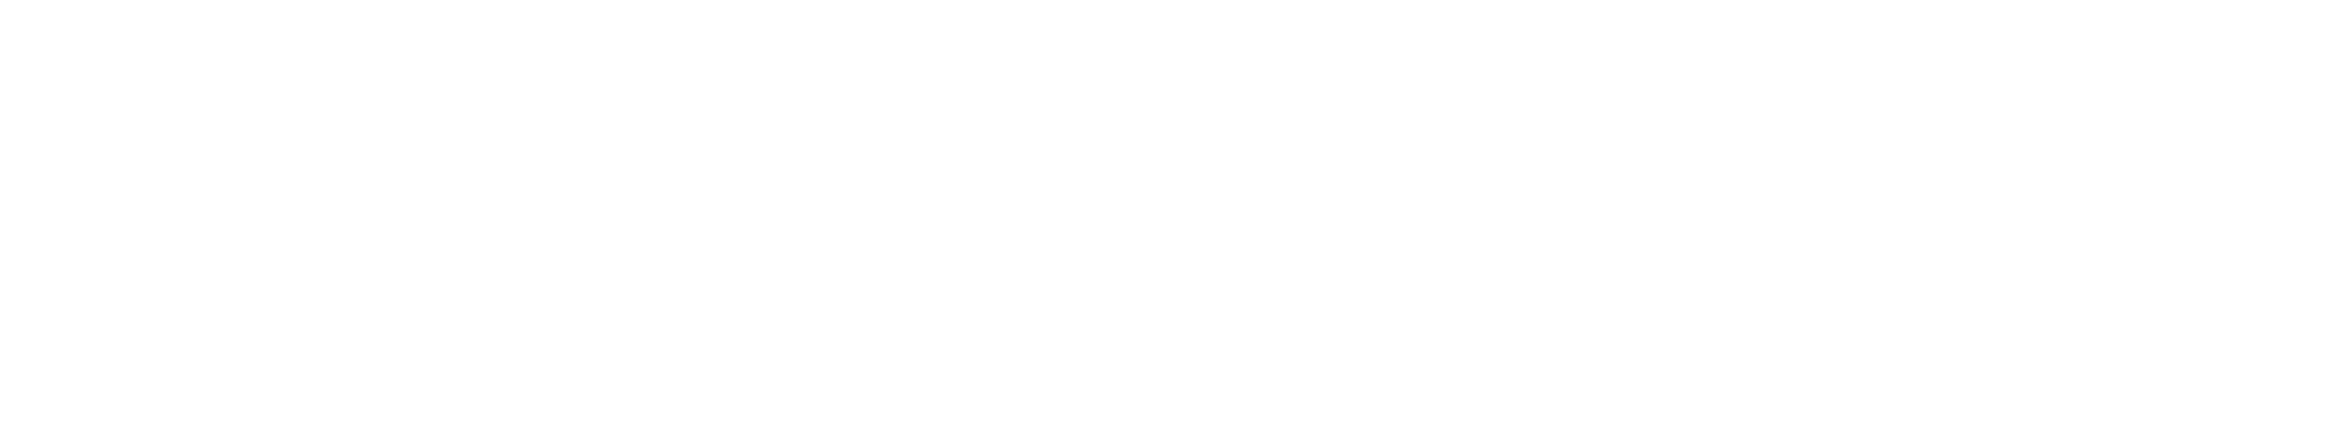 Missouri Department of Higher Education and Workforce Development Logo